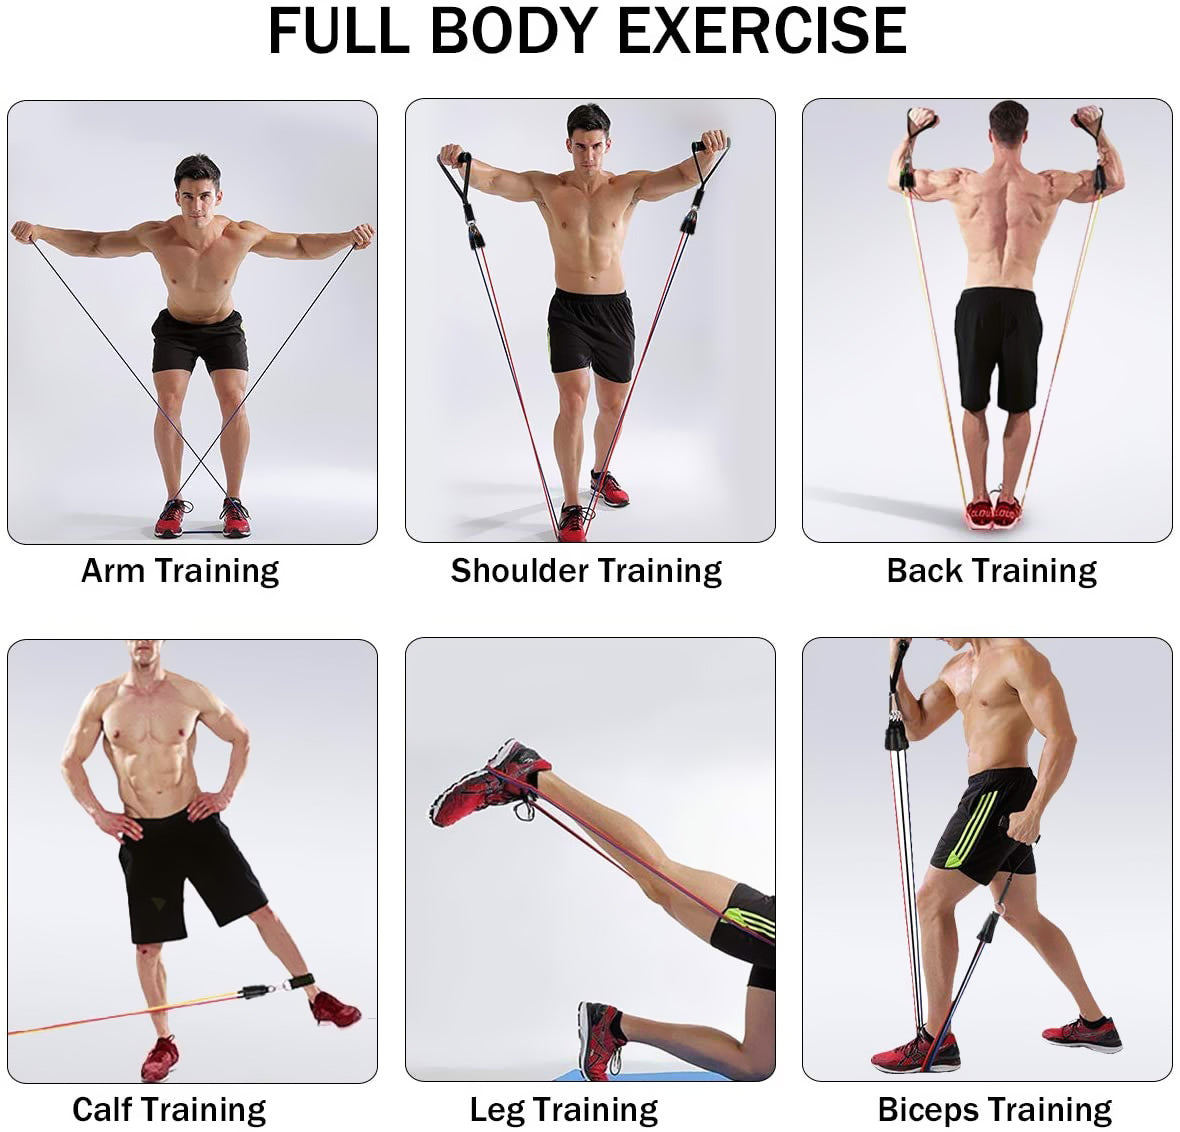 Generic 11x/Set Resistance Bands Workout Bands Elastic Fitness Exercise  Training Tubes